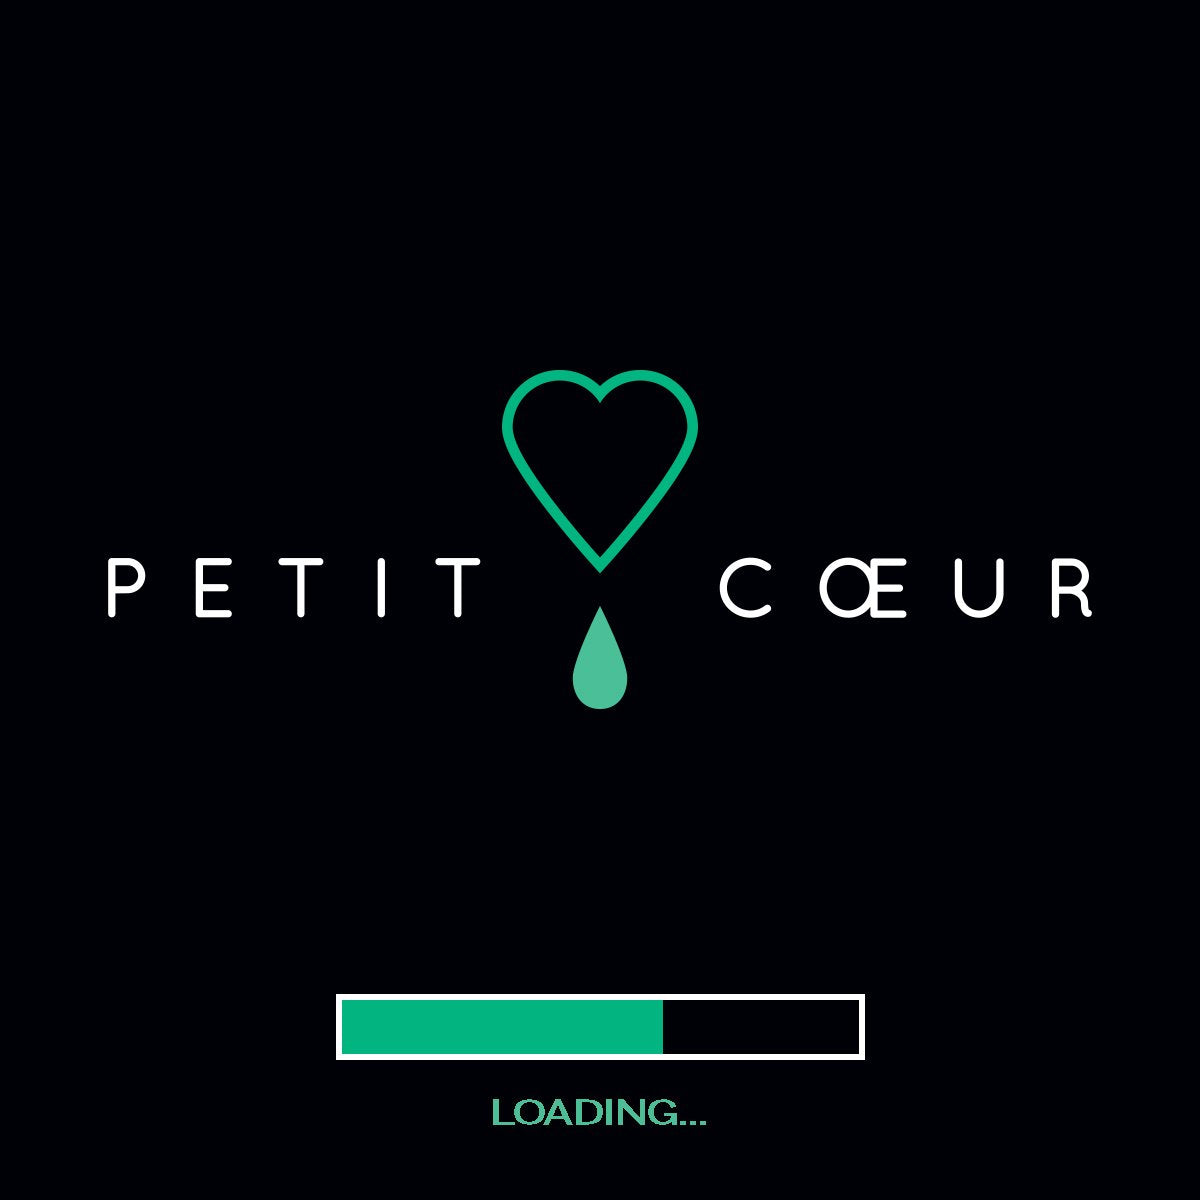 (c) Petitcoeur.com